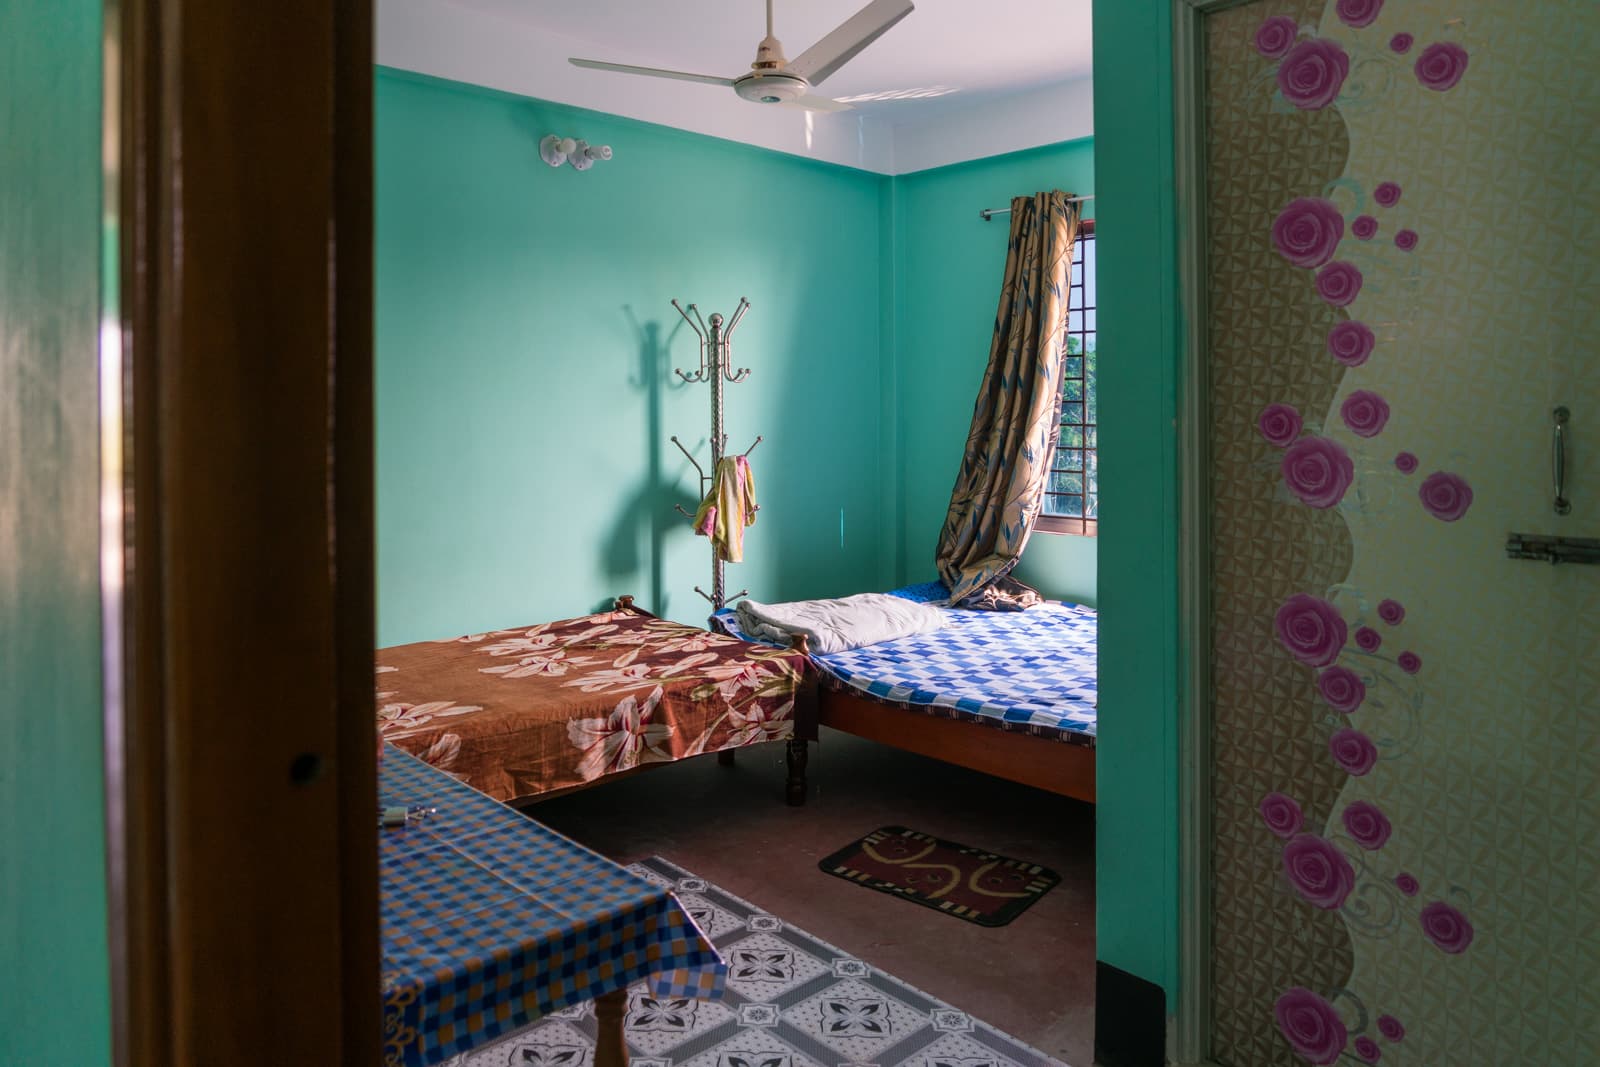 Travel guide to Nijhum Dwip island, Bangladesh - Double room at Hotel Sohel - Lost With Purpose travel blog